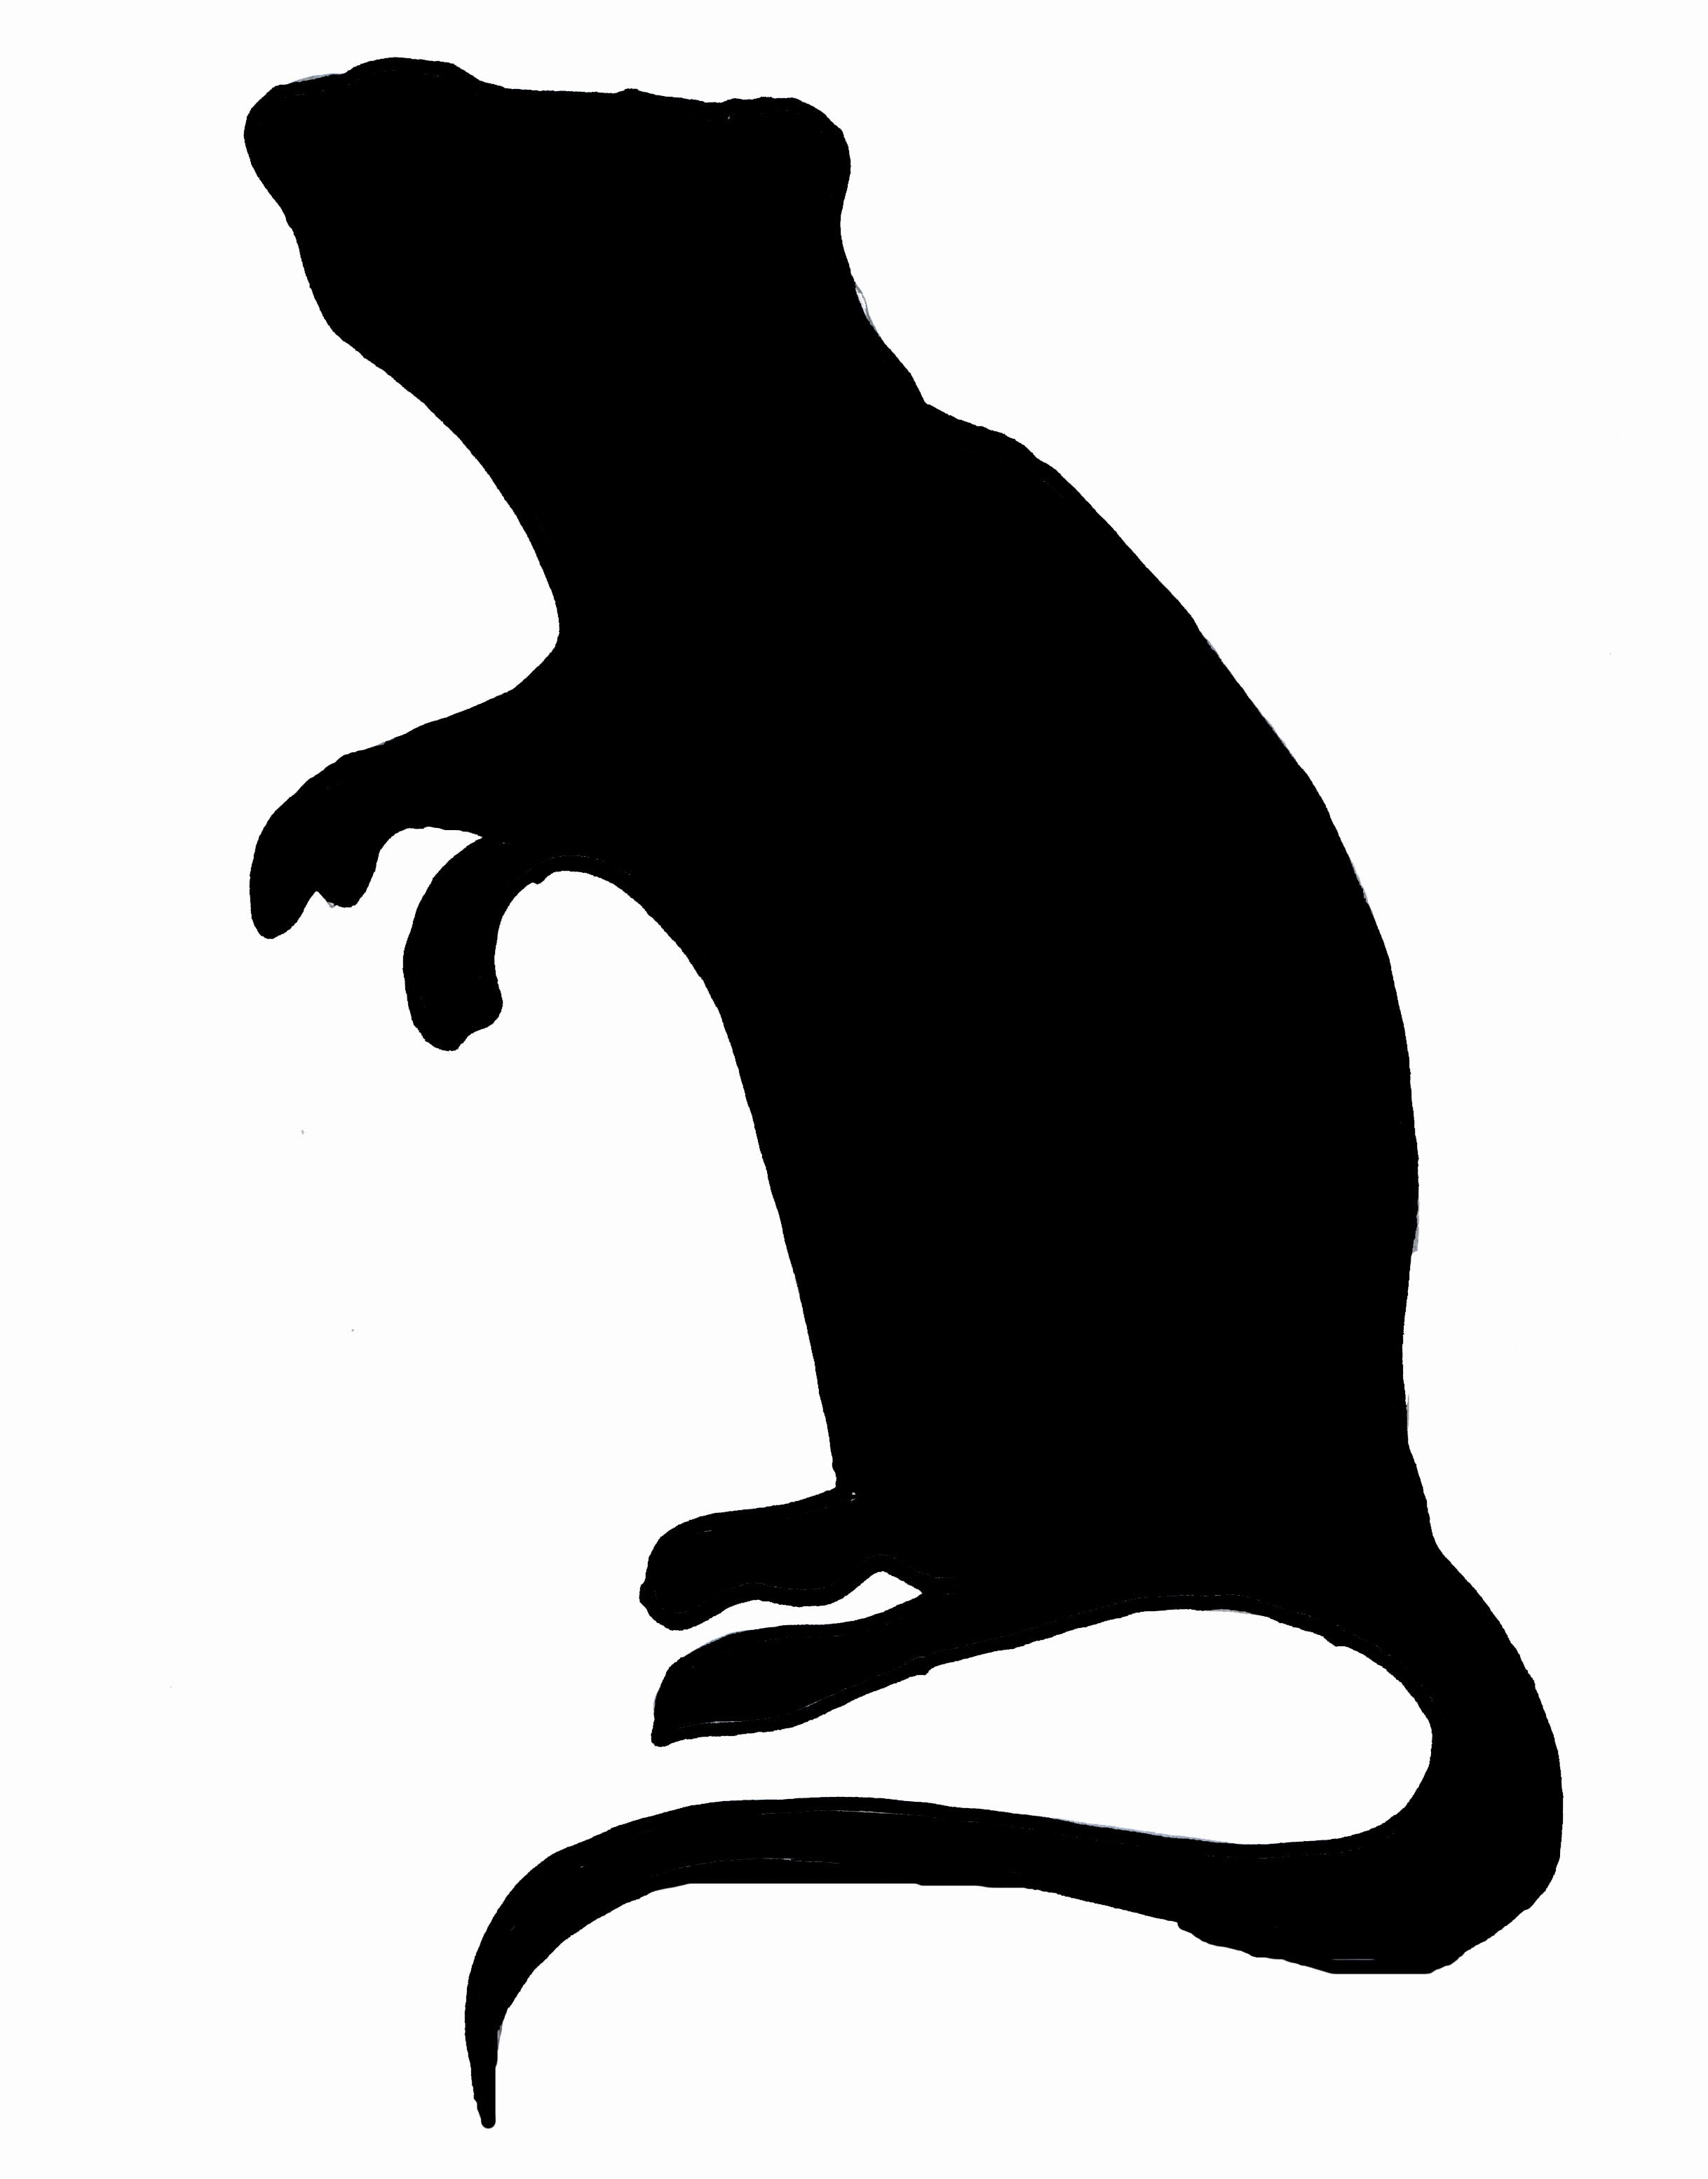 Rat silhouette clipart